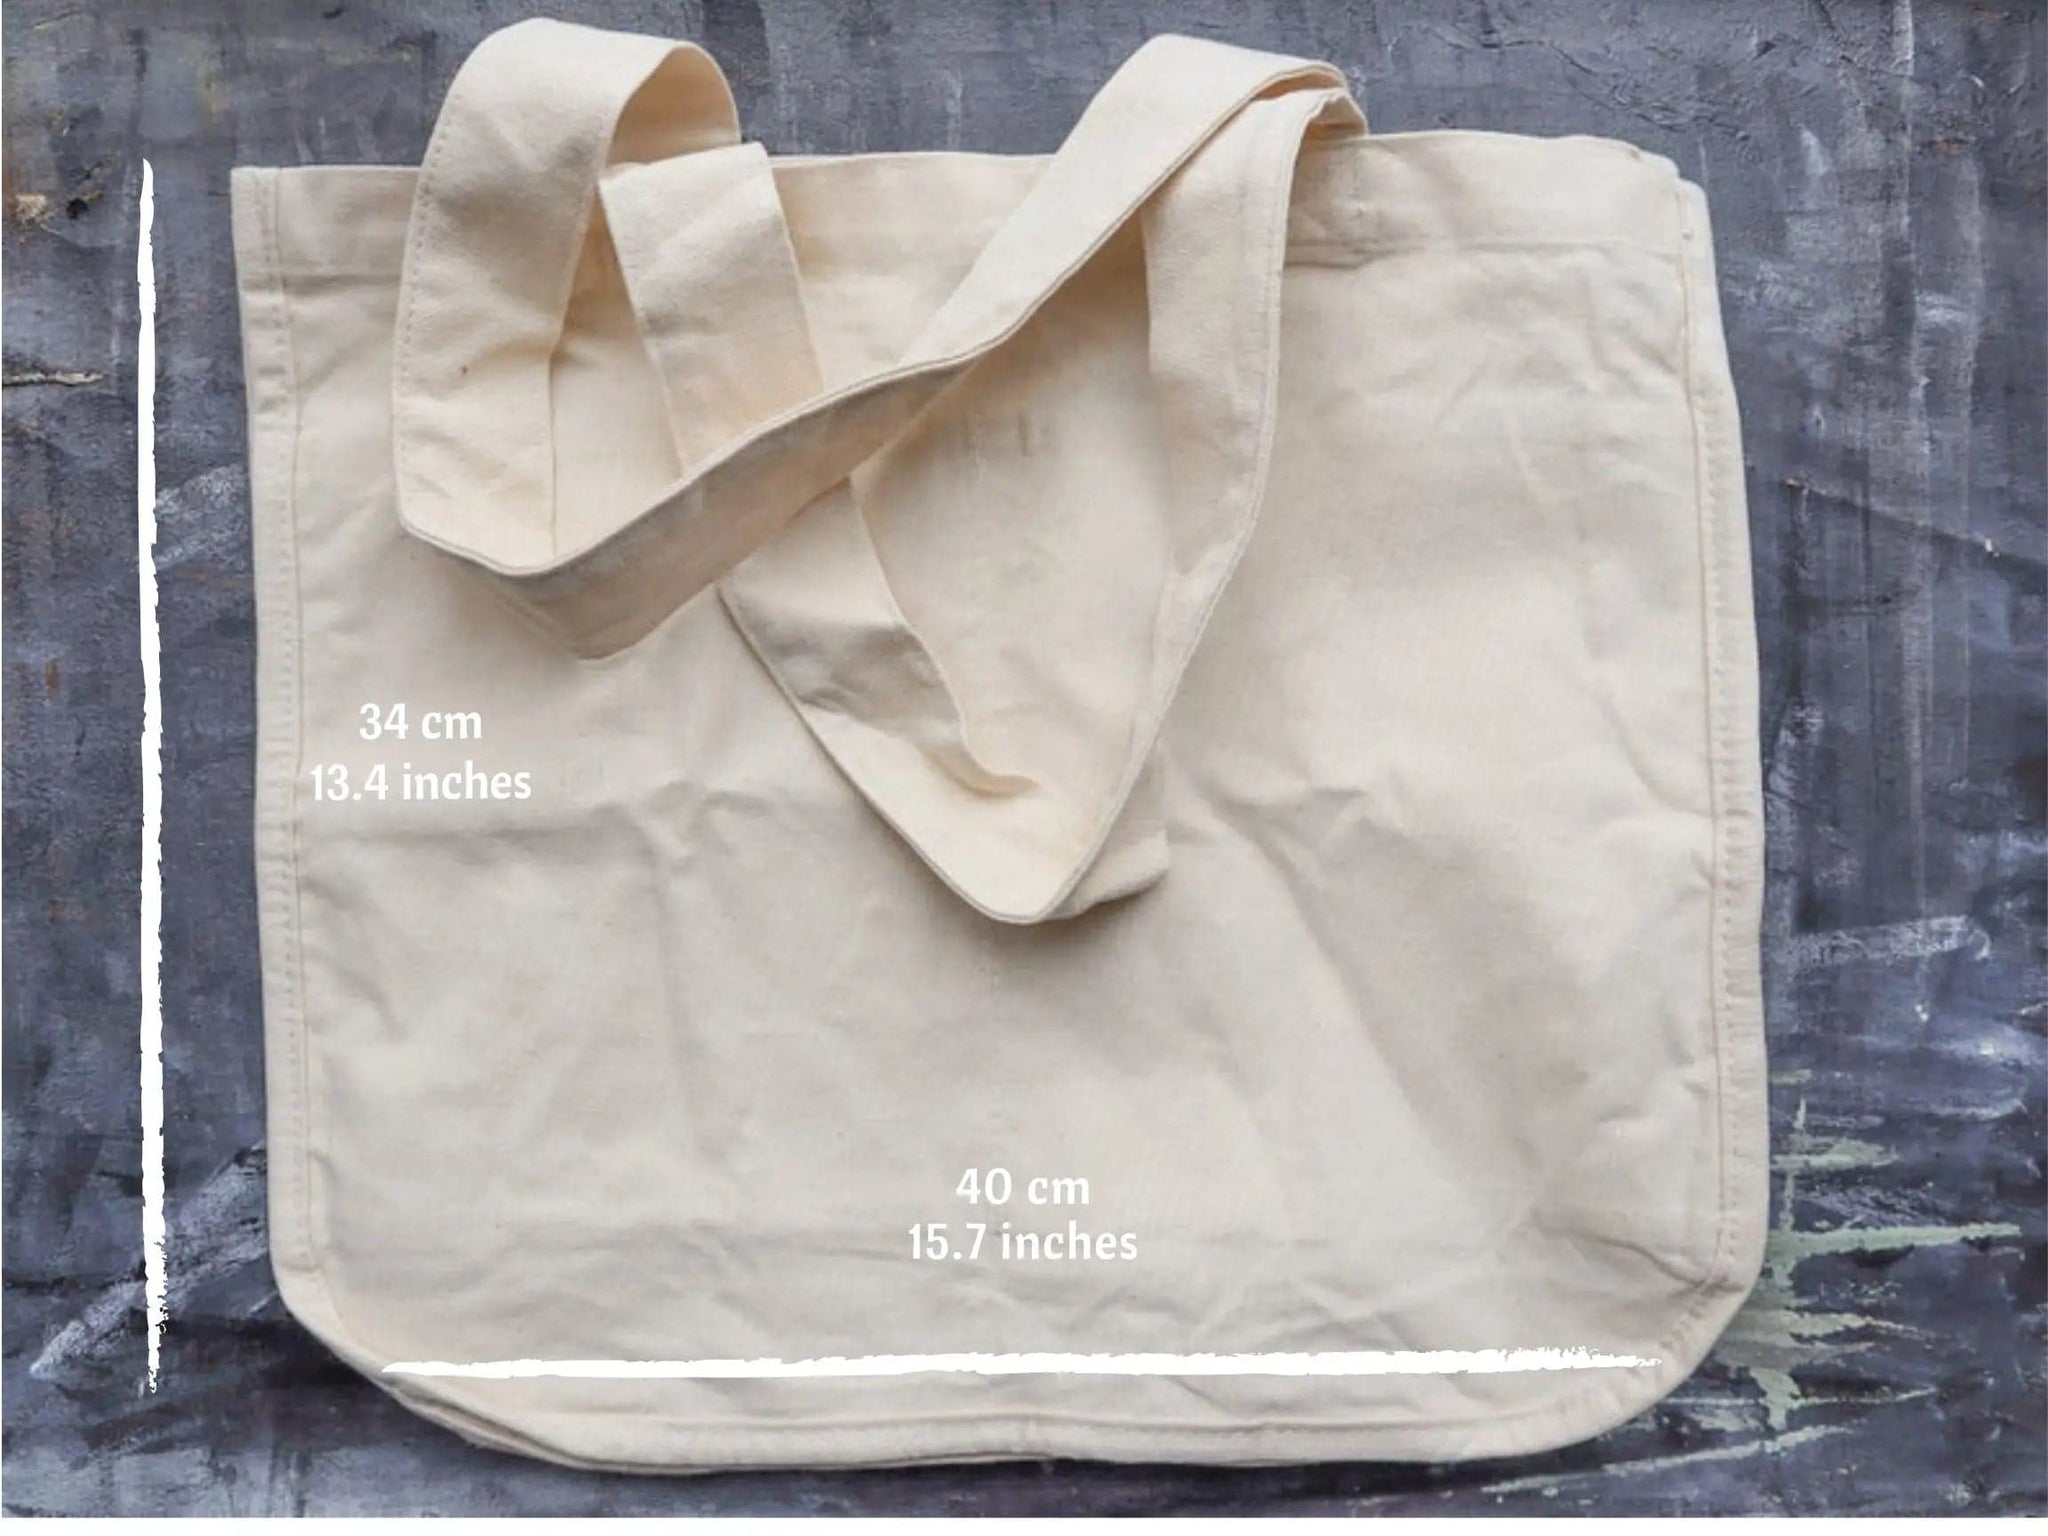 measurement of canvas shoulder bag